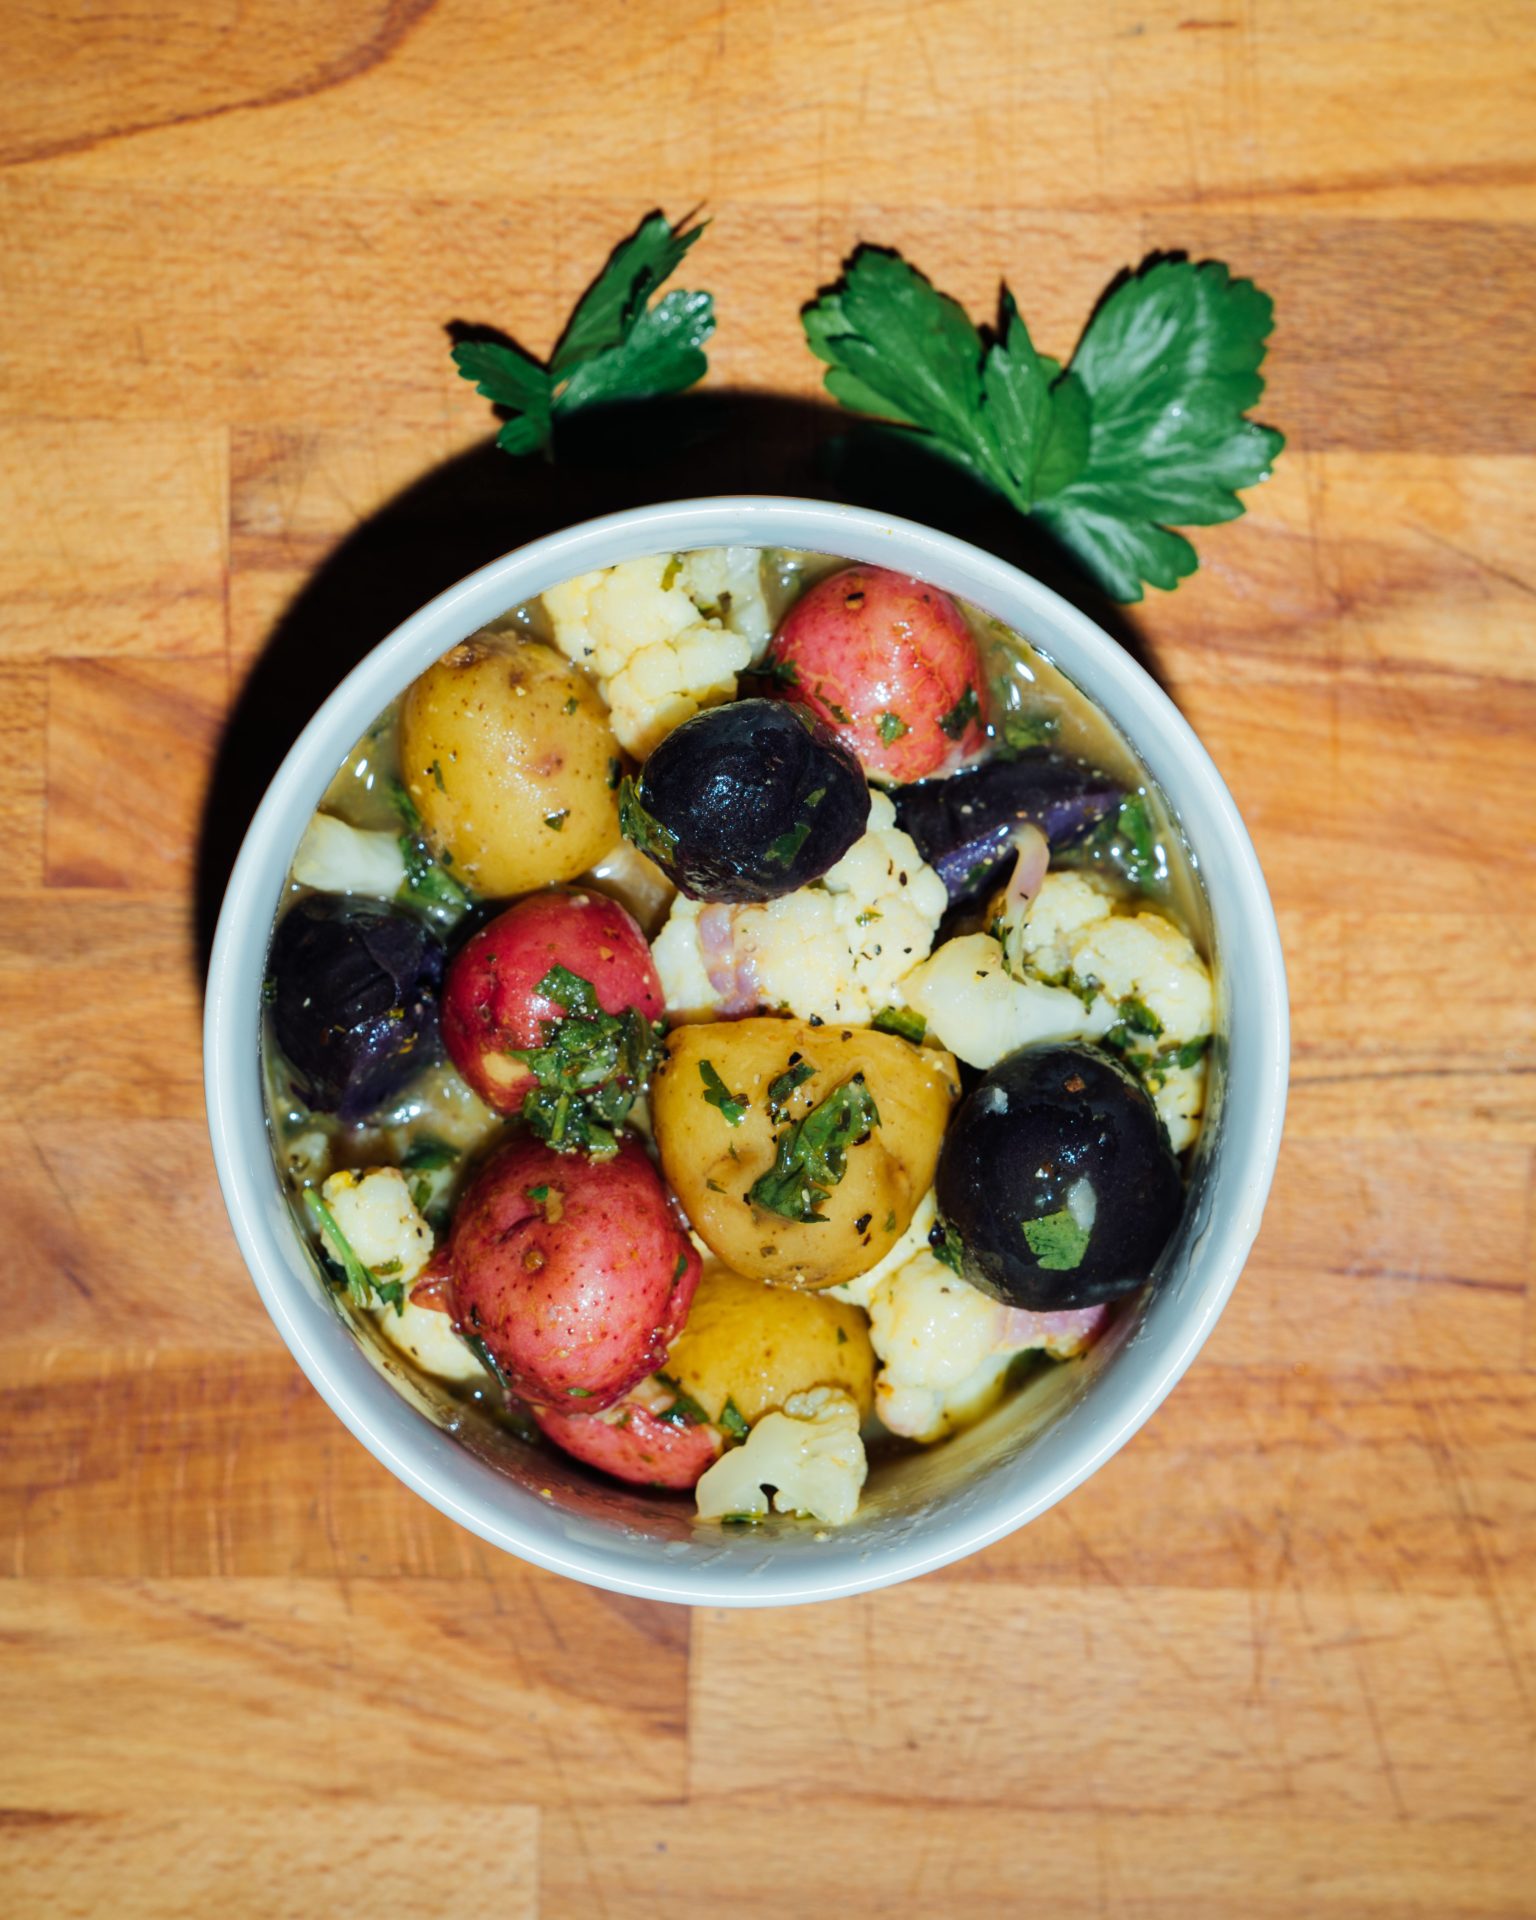 instant pot recipes instant pot potato salad appetizers easy healthy appetizers